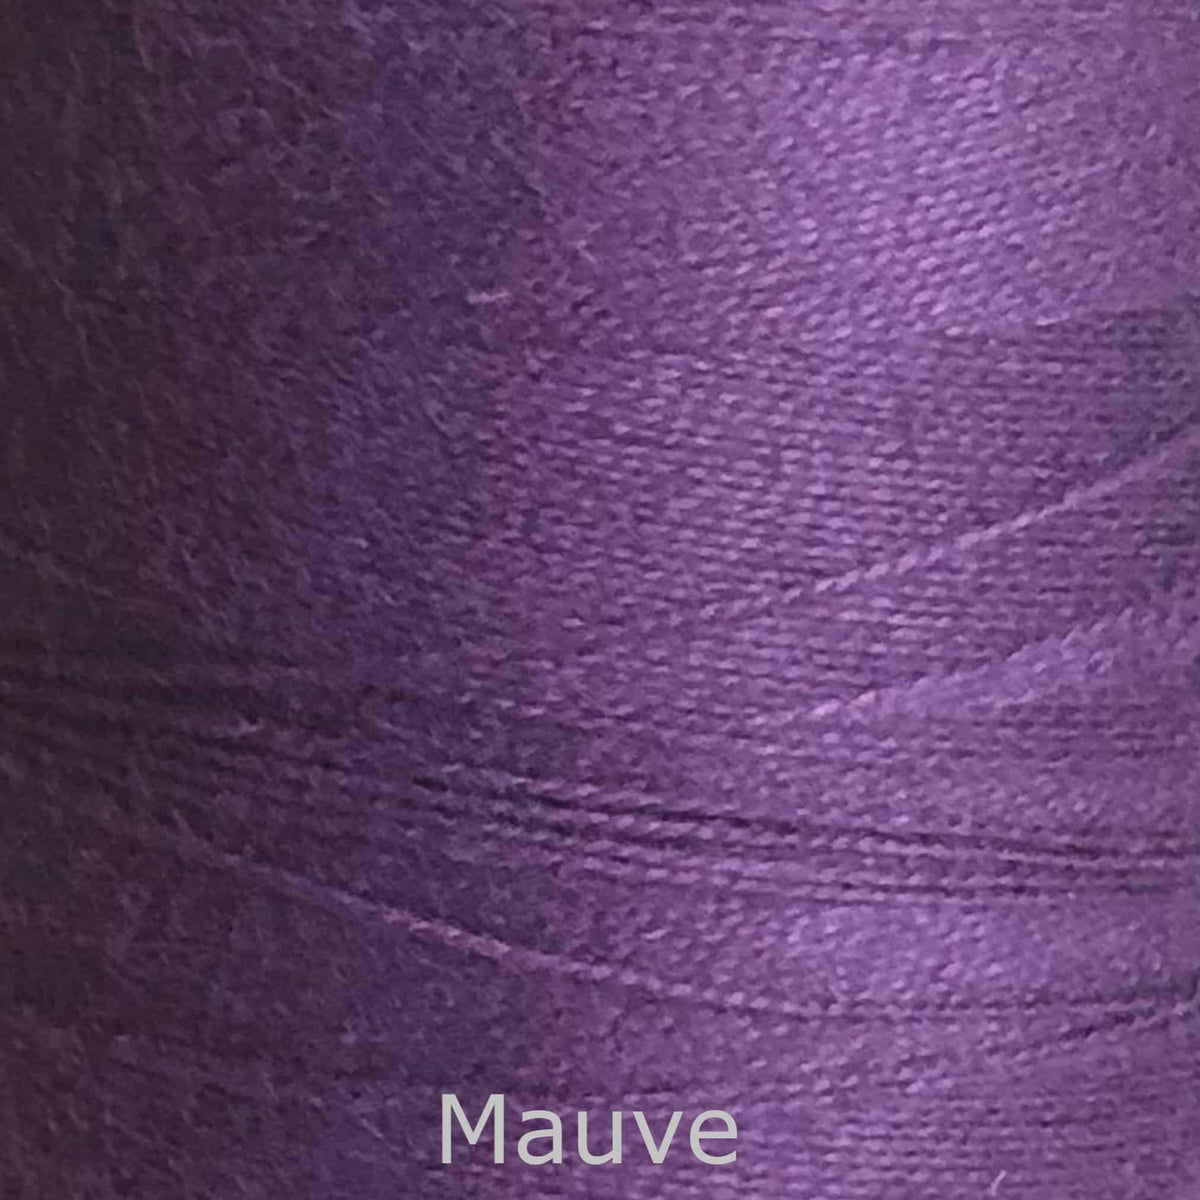 16/2 cotton weaving yarn mauve